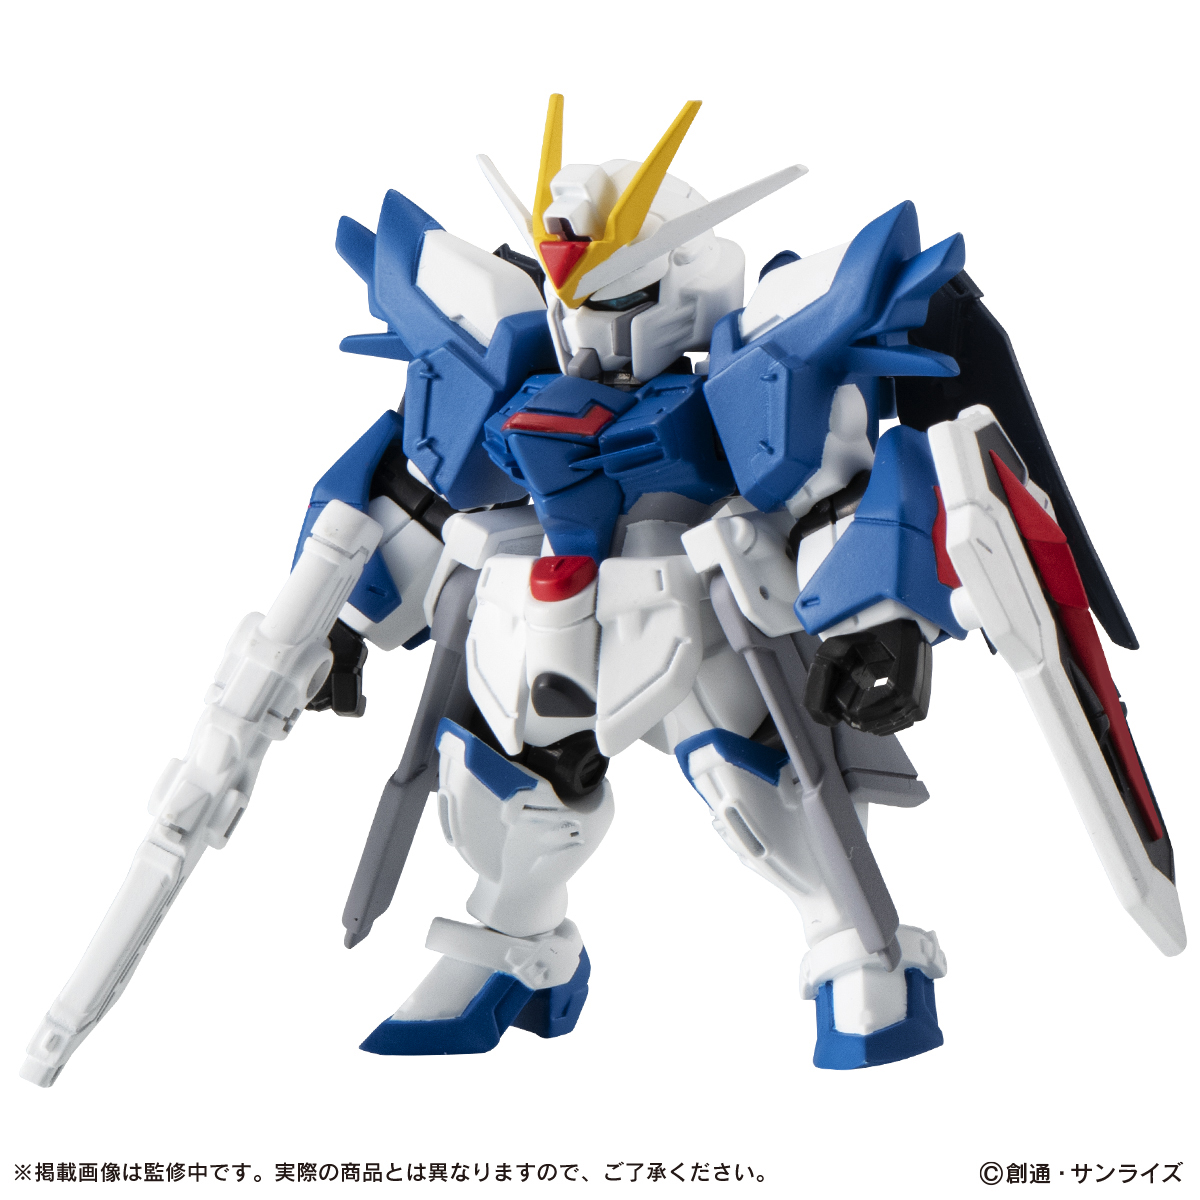 Gashapon Gundam Series: Gundam Mobile Suit Ensemble Part.27